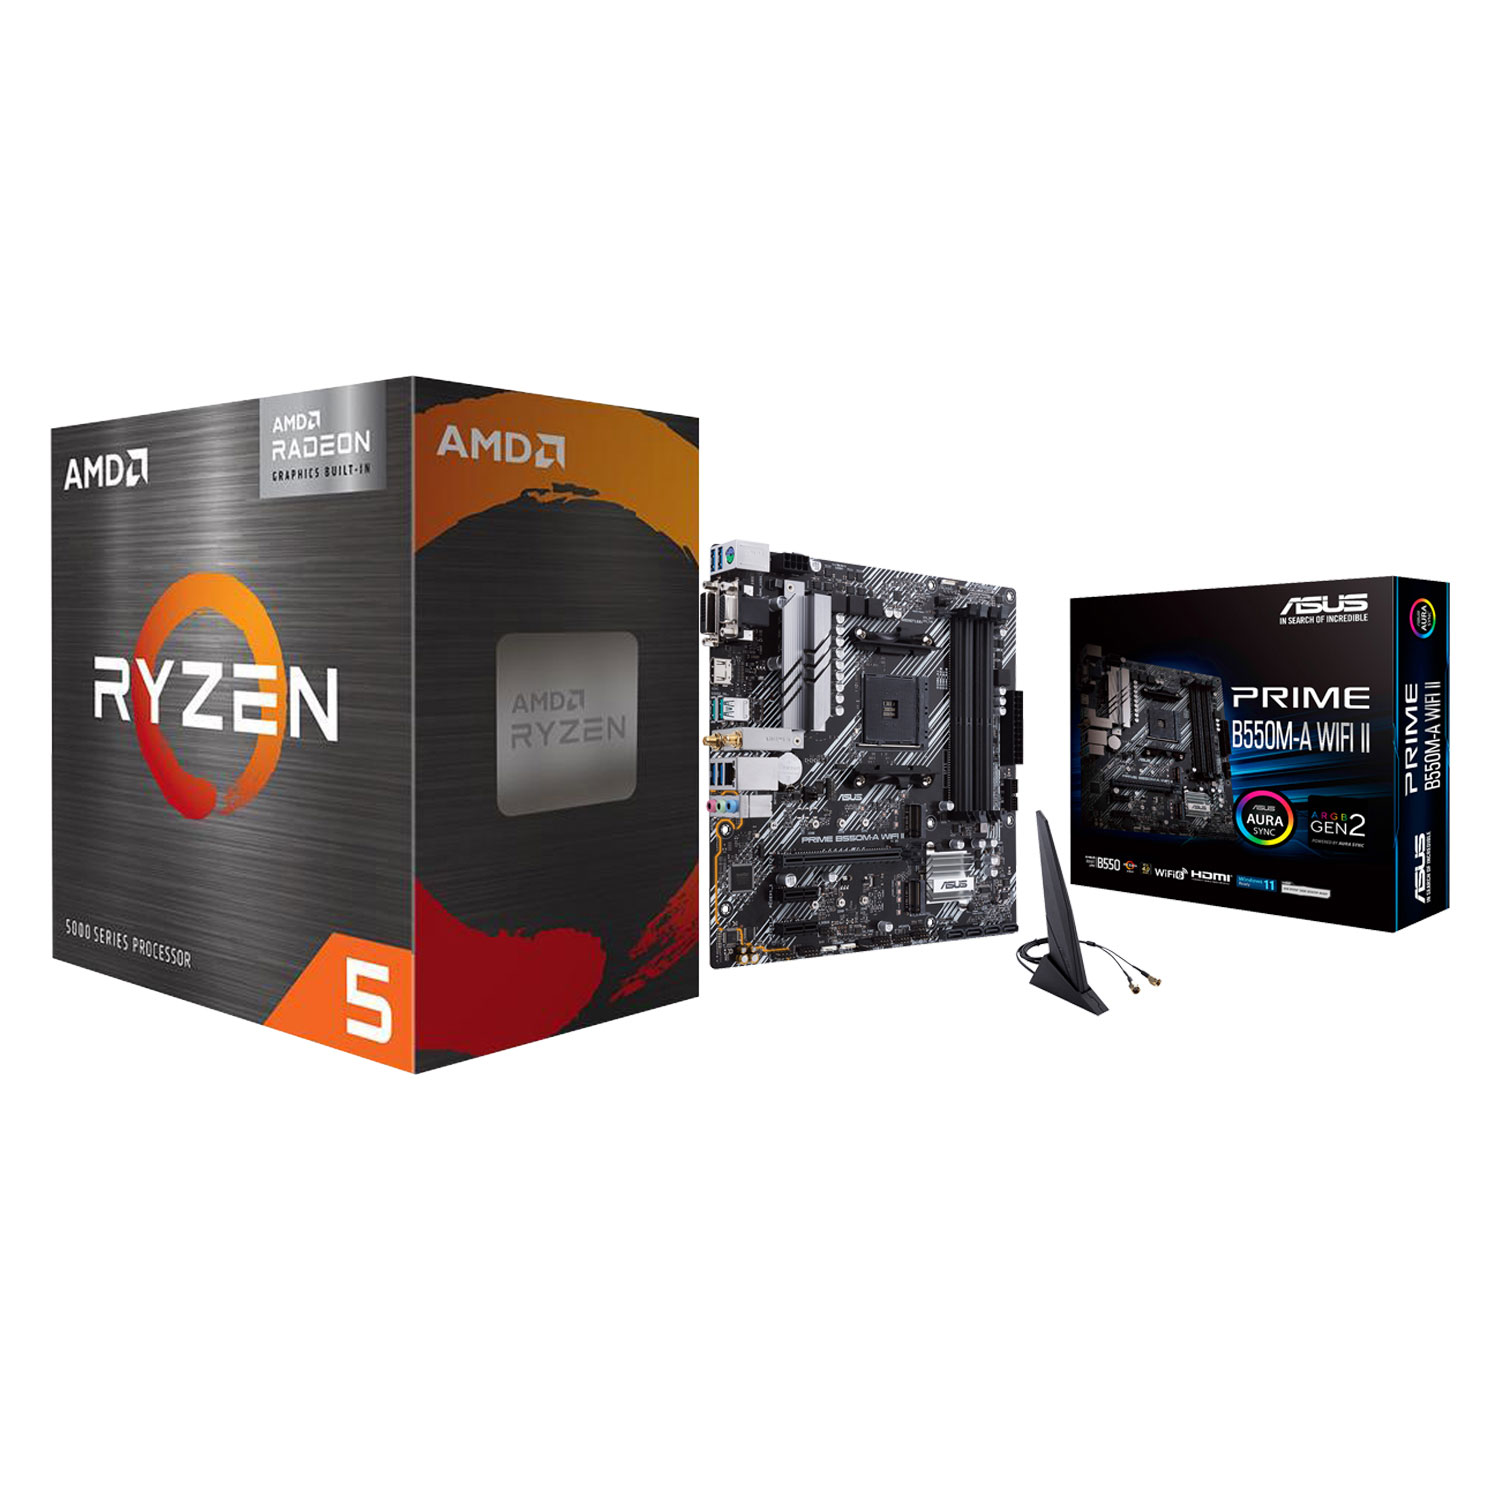 AMD Ryzen 5 5500GT 6-Core 3.6GHz AM4 Processor & ASUS AM4 Motherboard for AMD Ryzen 3000/4000/5000 Series CPUs